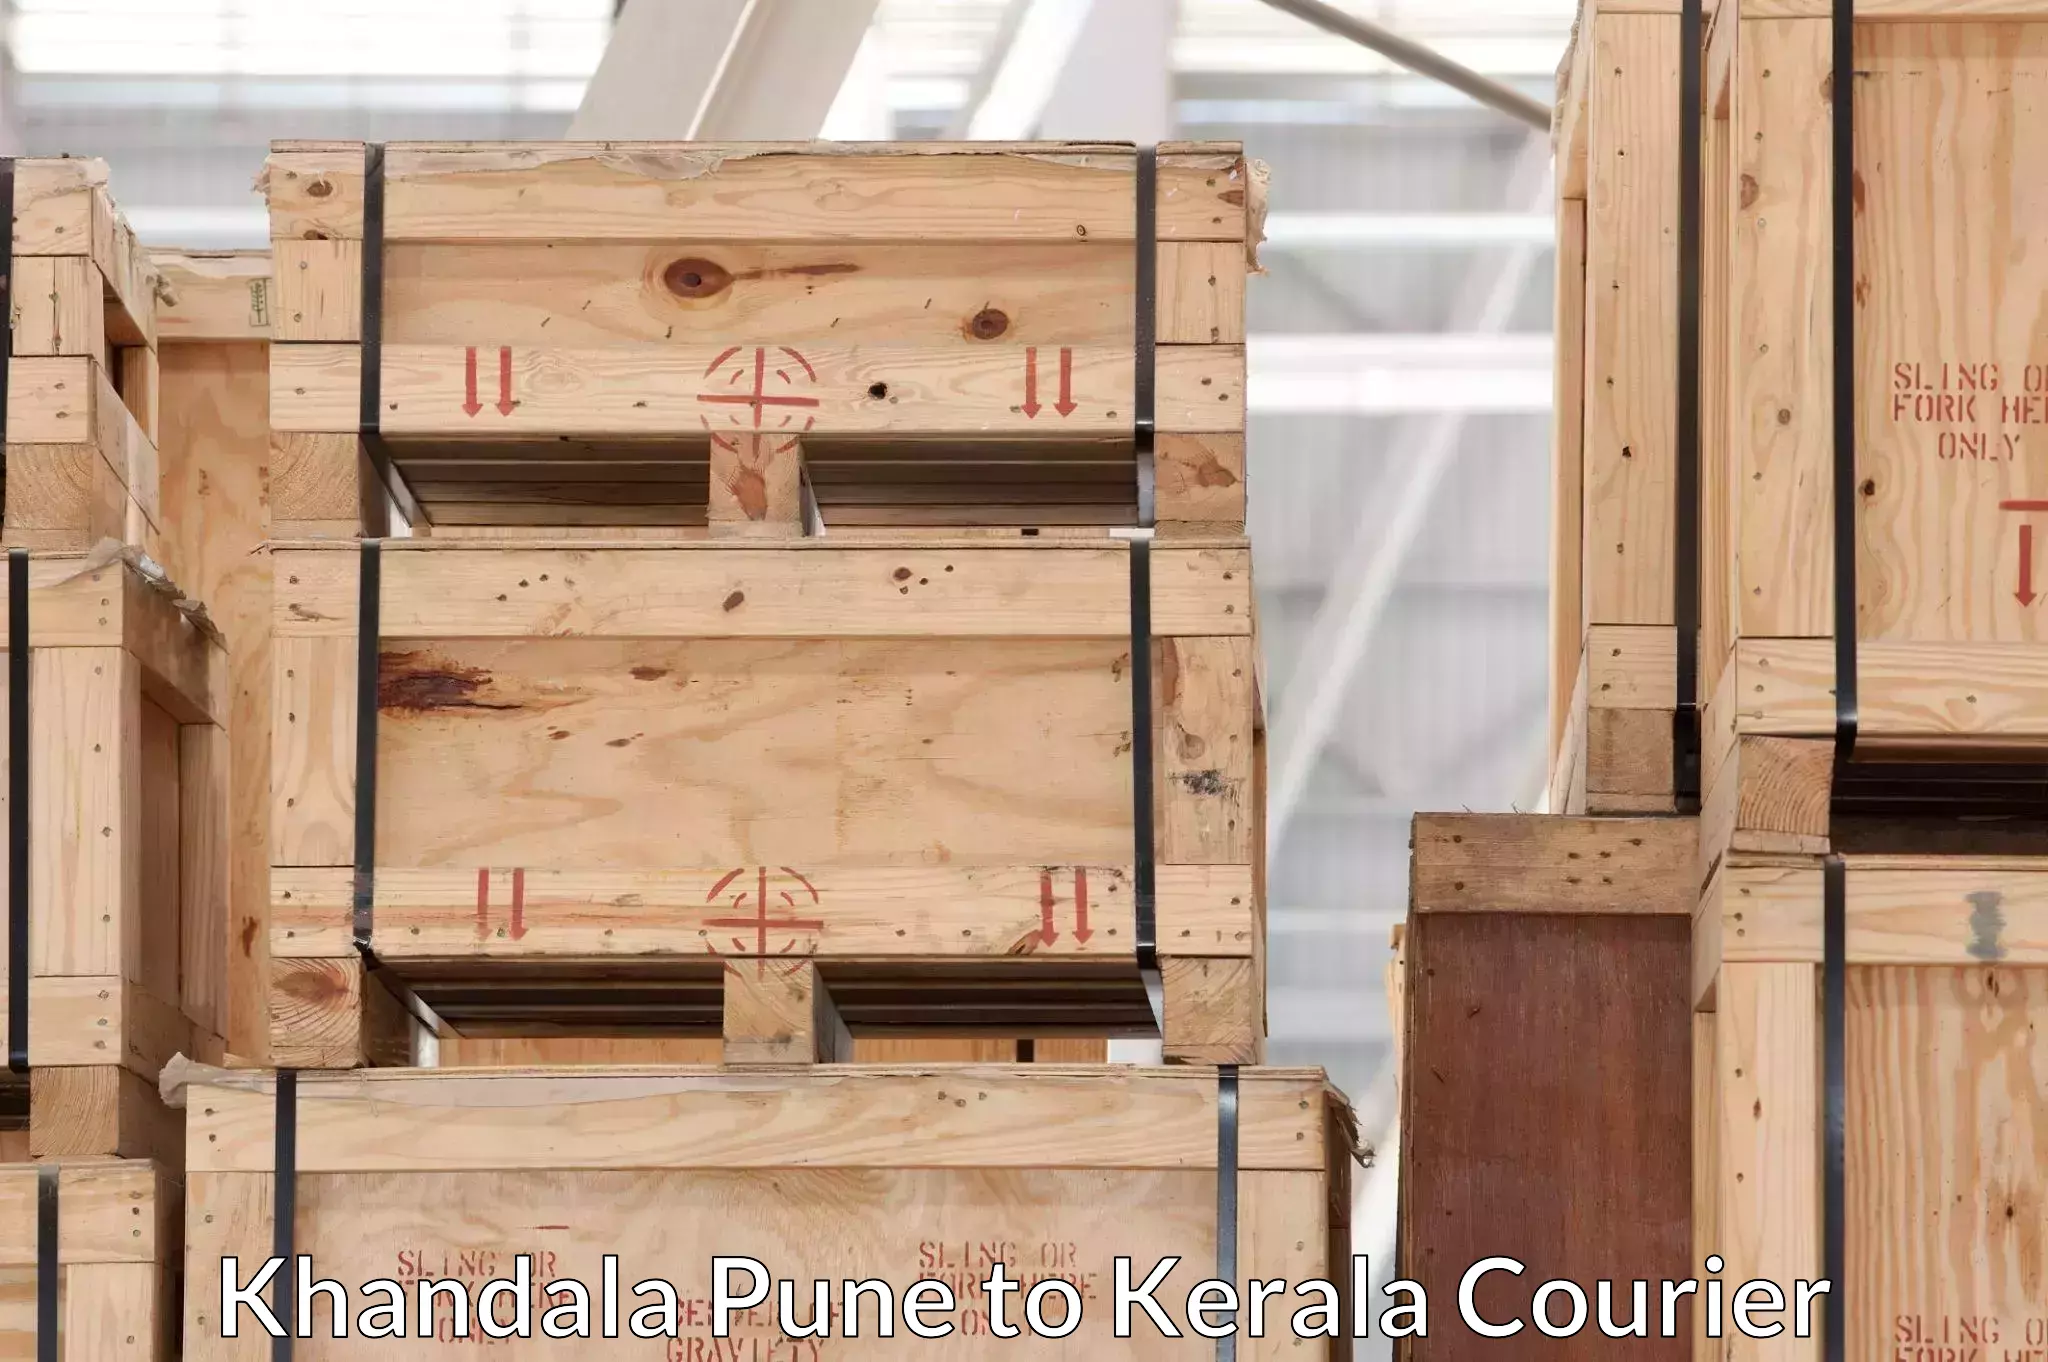 Home moving experts Khandala Pune to Kerala